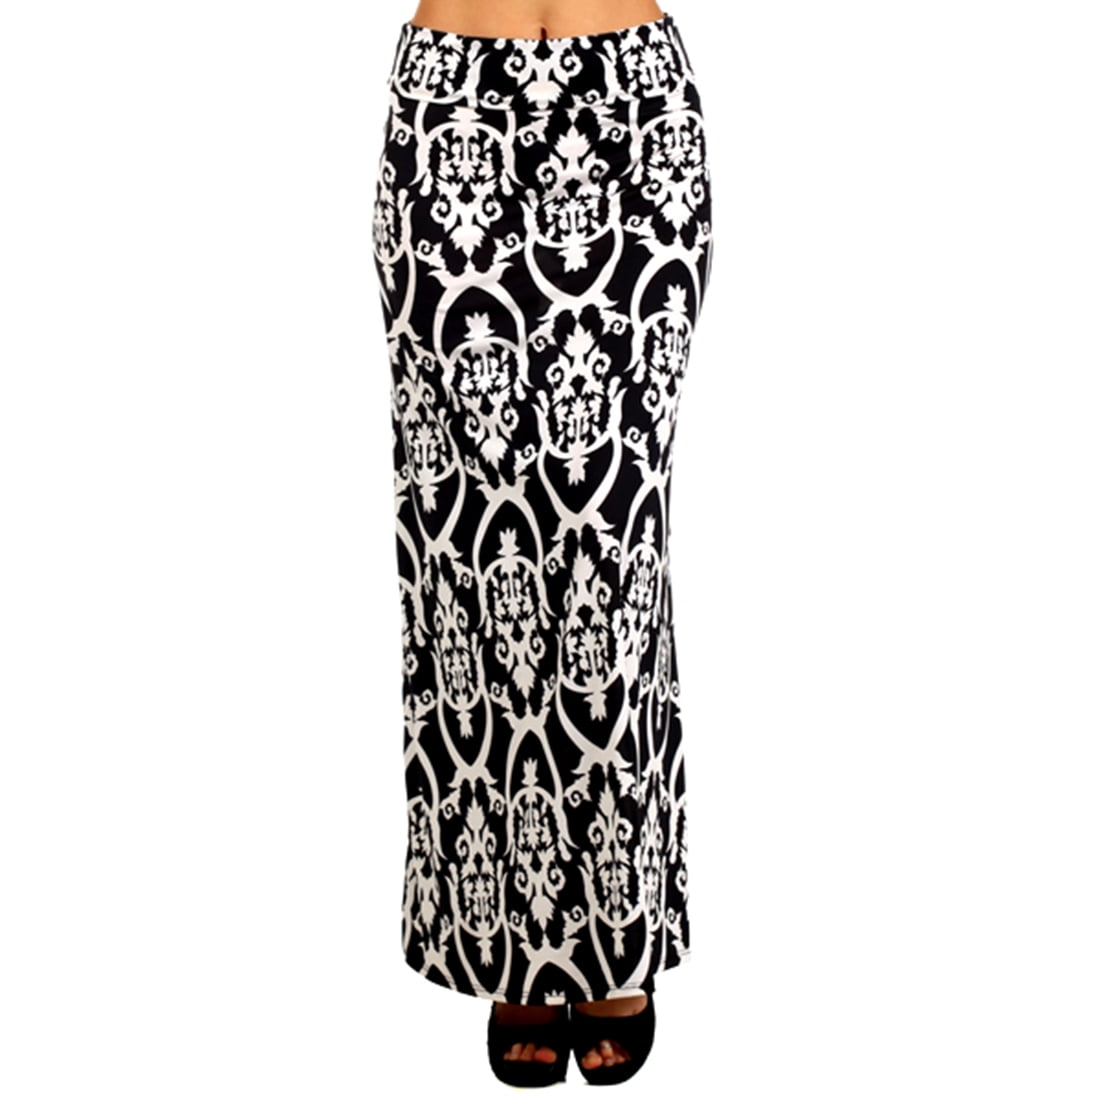 Black and White Maxi Skirt with Damask Pattern, Size XL - Walmart.com